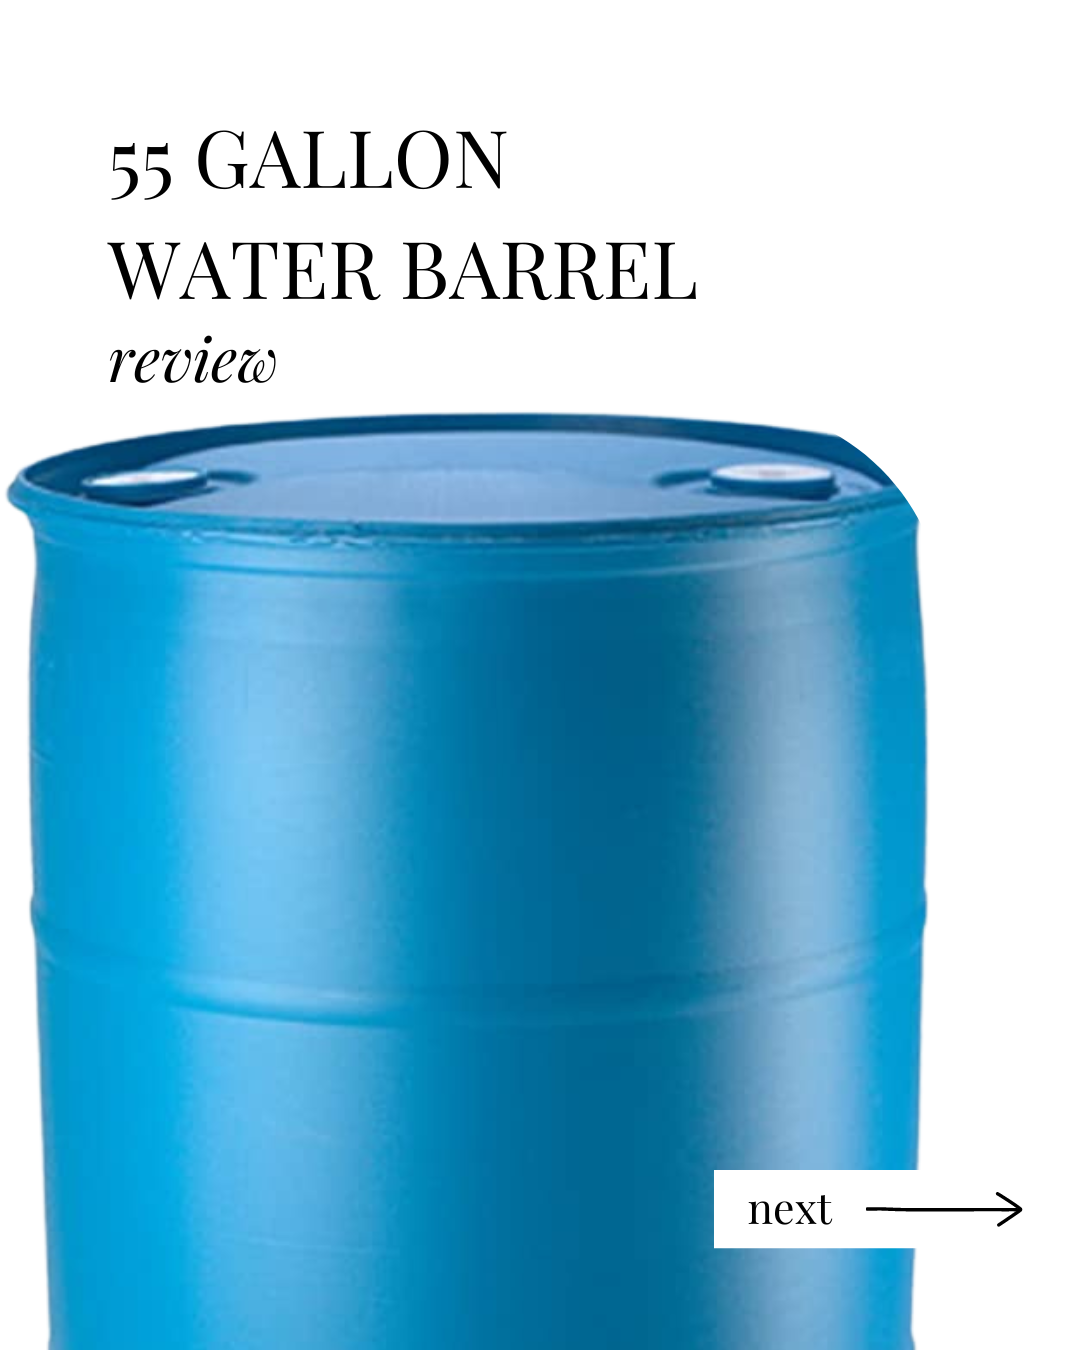 55 Gallon Water Barrel Review